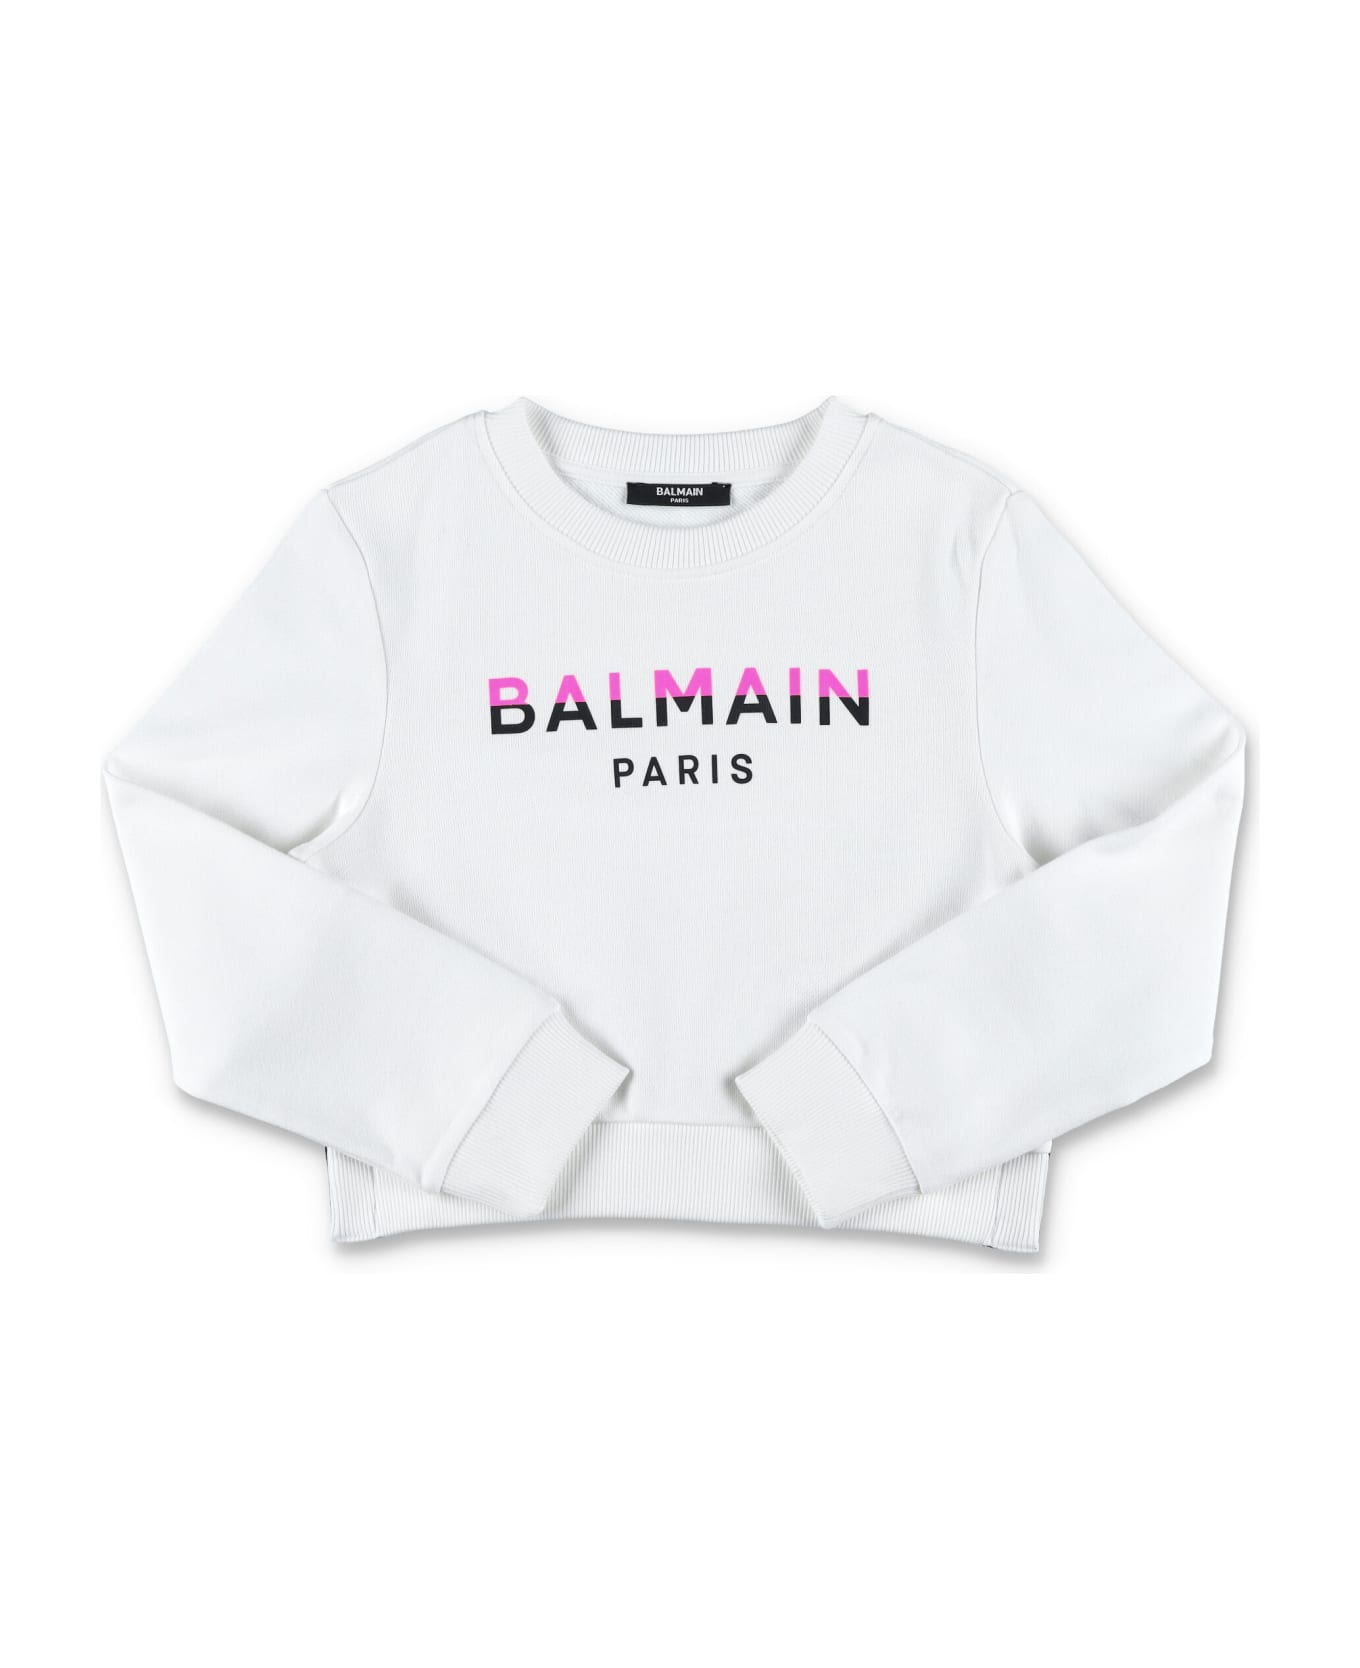 Balmain Paris Two-tone Sweatshirt - WHITE/FUCHSIA